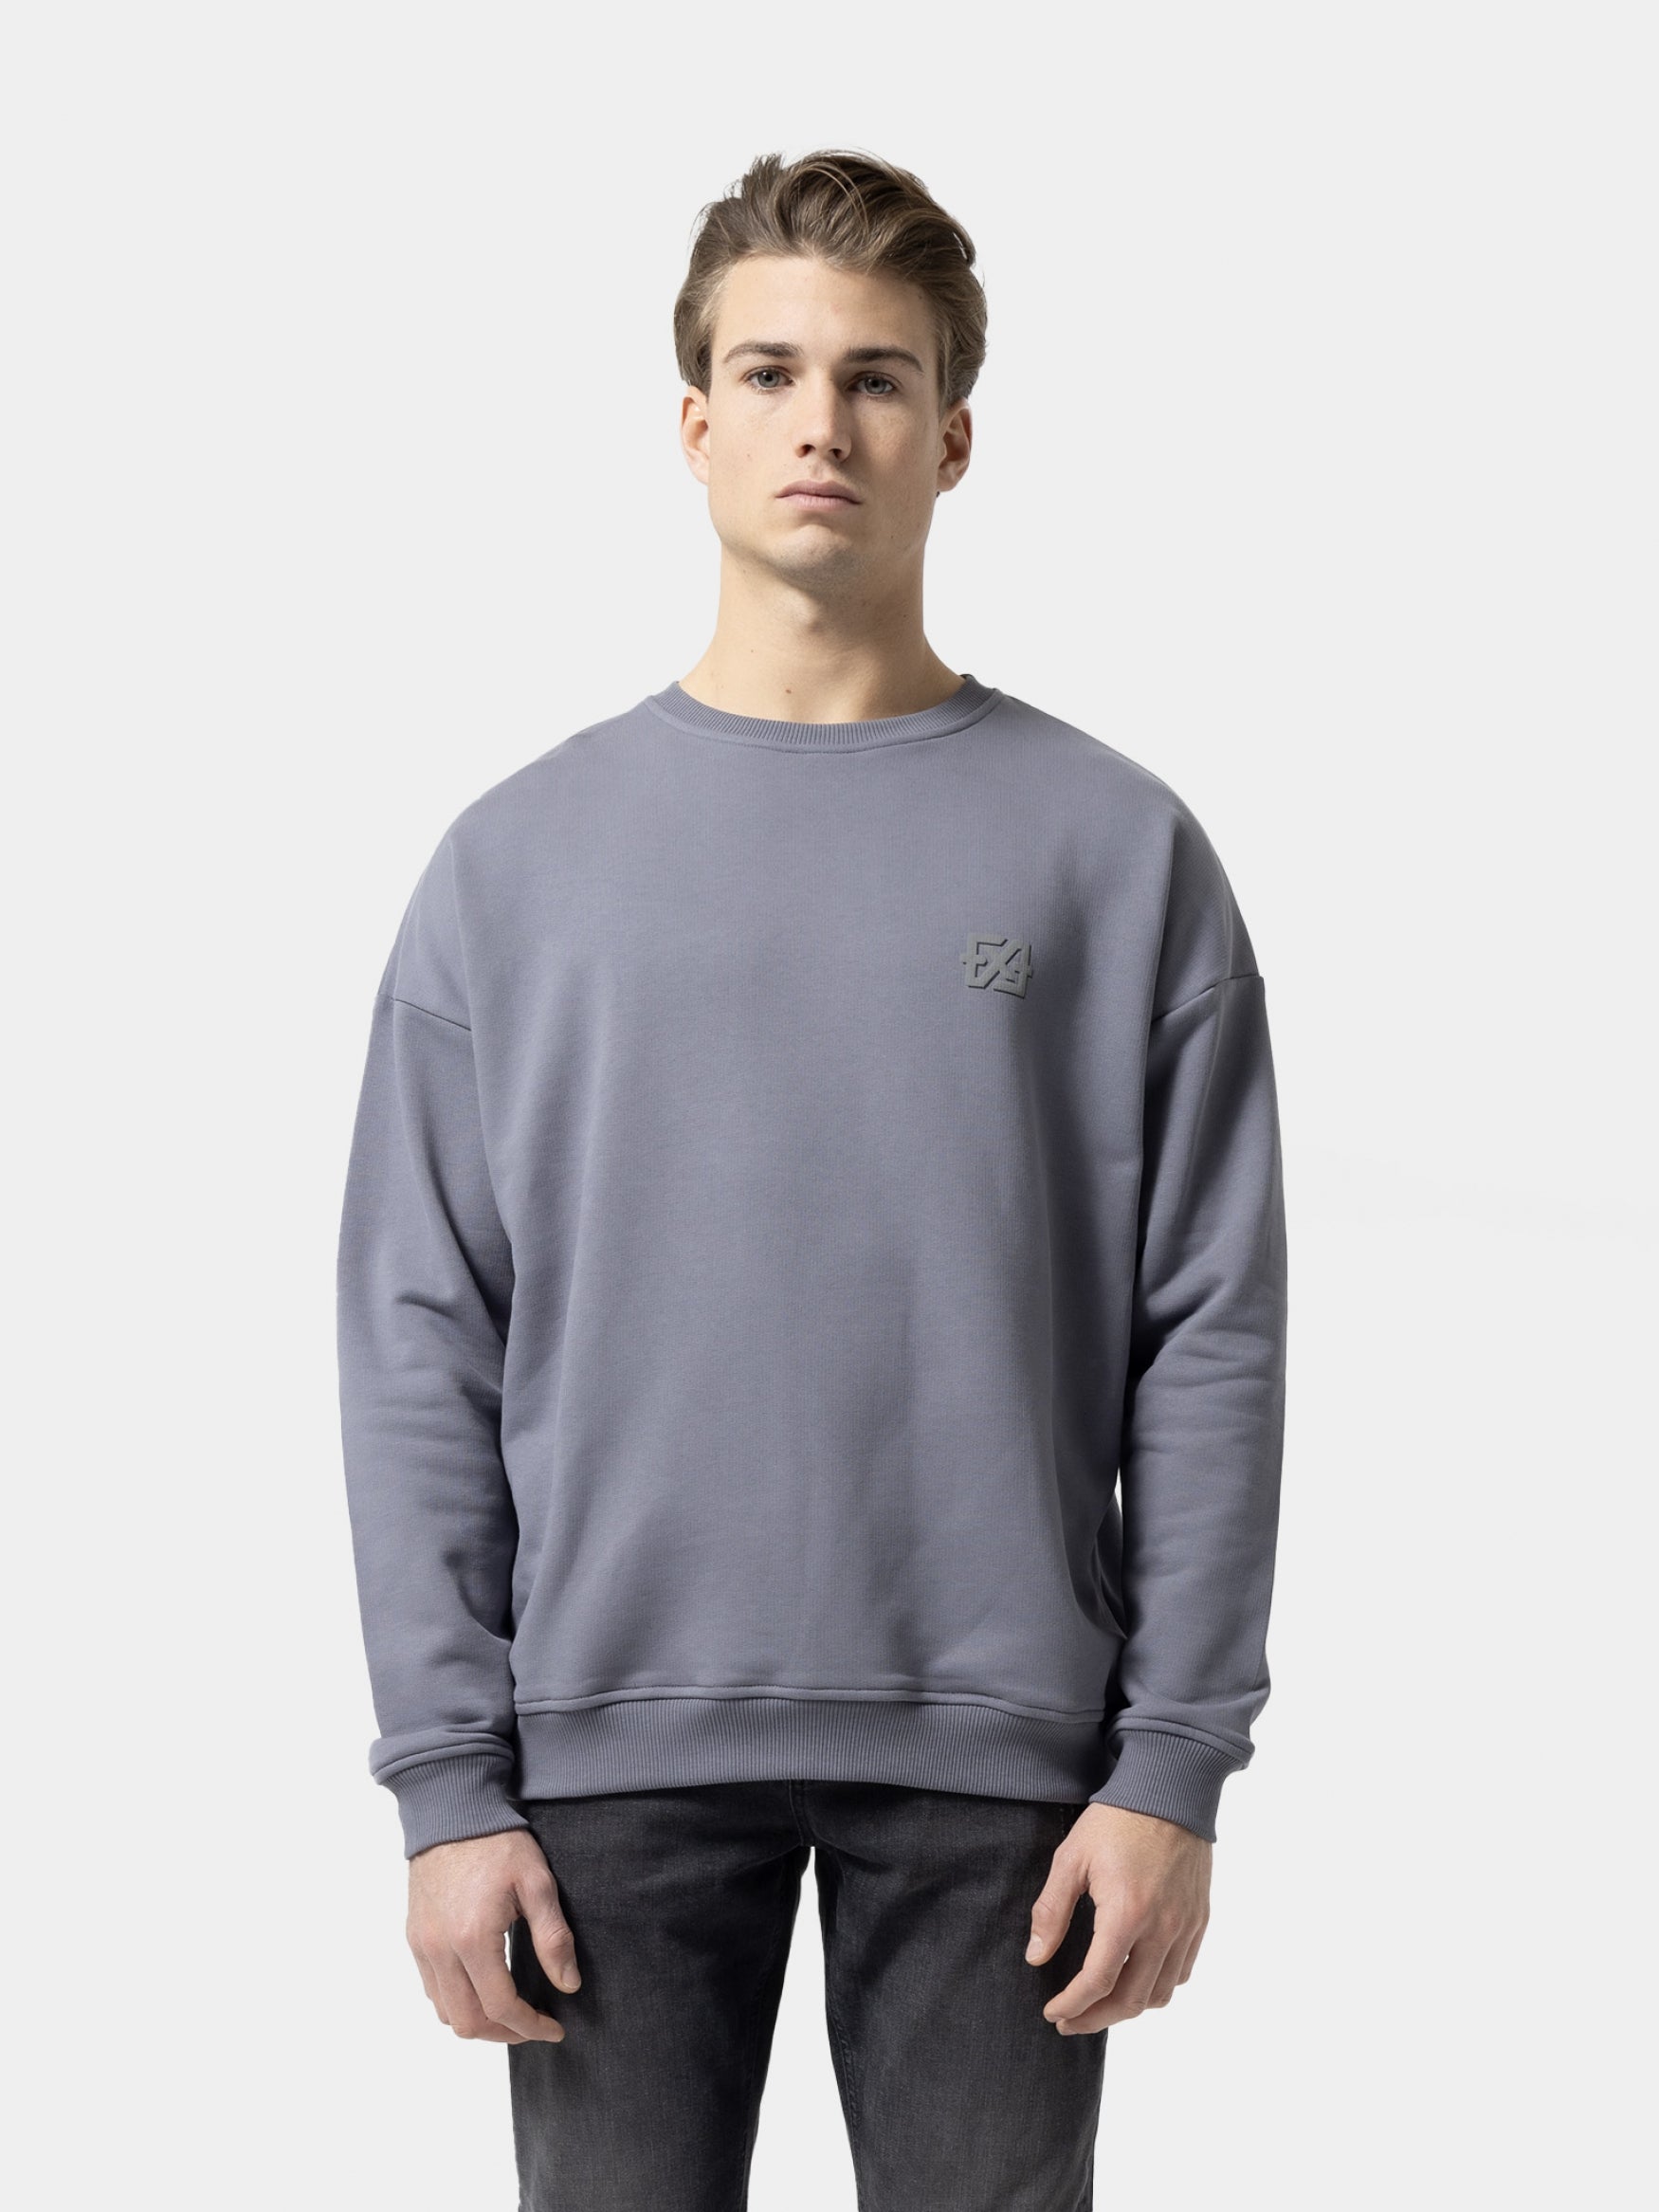 Roadsweater-grey-1_81dc7f28-4fe7-48a2-8bb3-0b0288d565e8.jpg